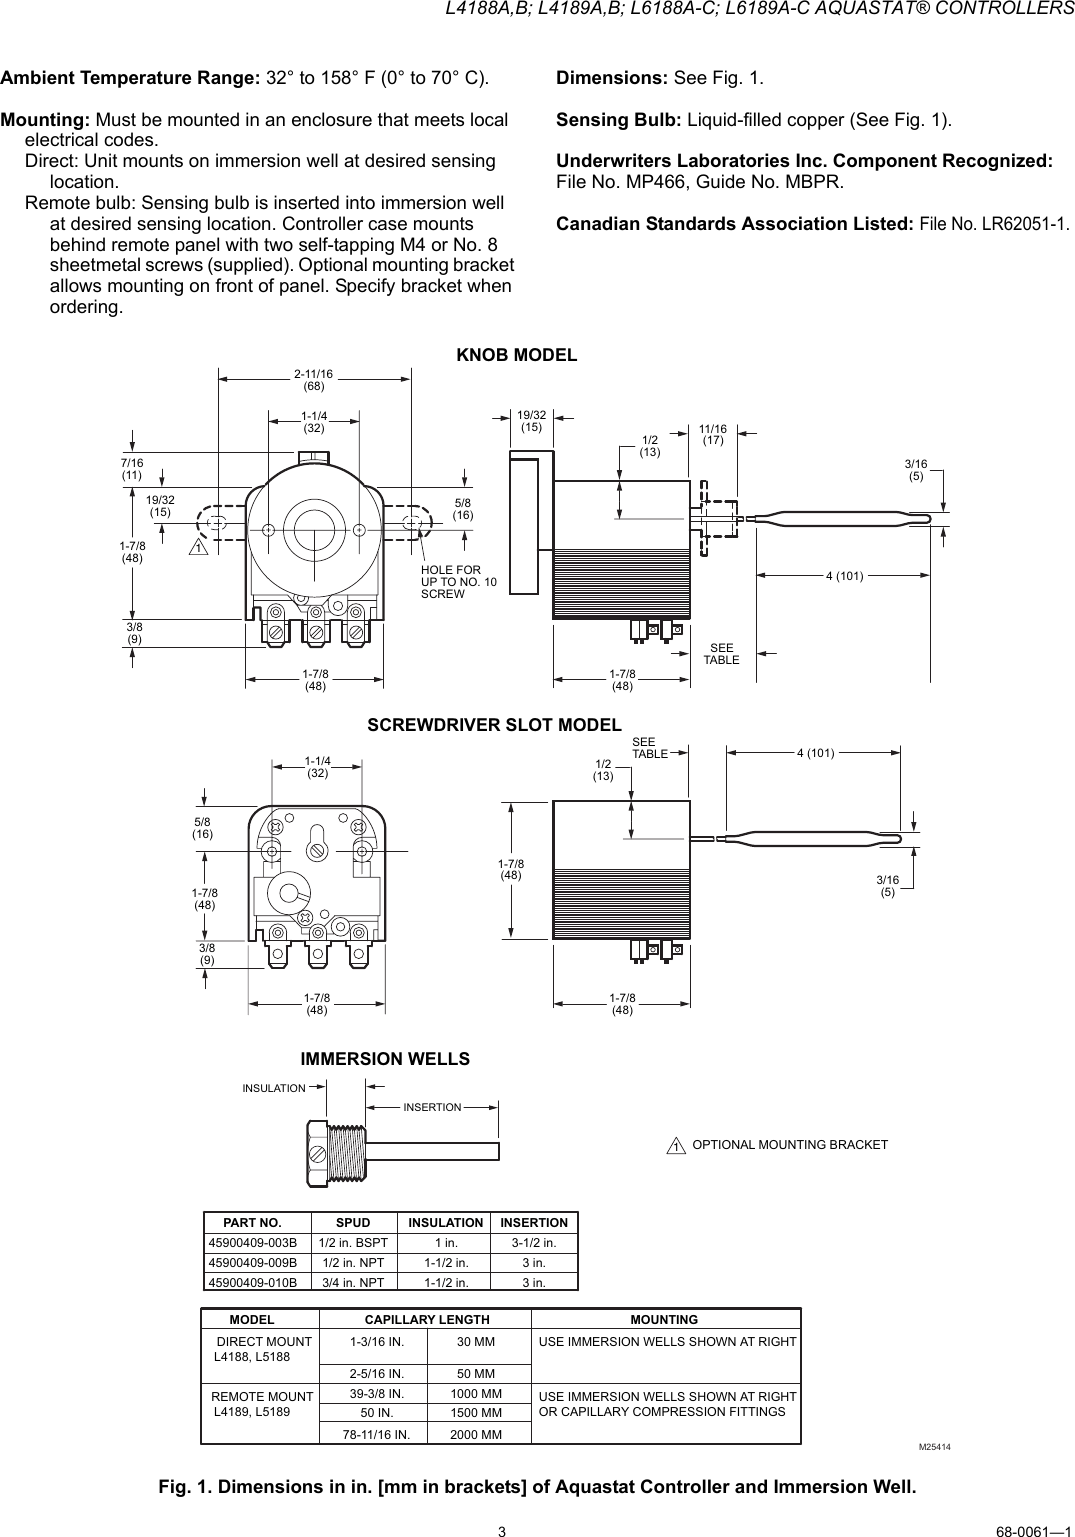 Page 3 of 8 - Honeywell Honeywell-Aquastat-L6188A-C-Users-Manual- 68-0061-1 - L4188A,B; L4189A,B; L6188A-C; L6189A-C Aquastat® Controllers  Honeywell-aquastat-l6188a-c-users-manual